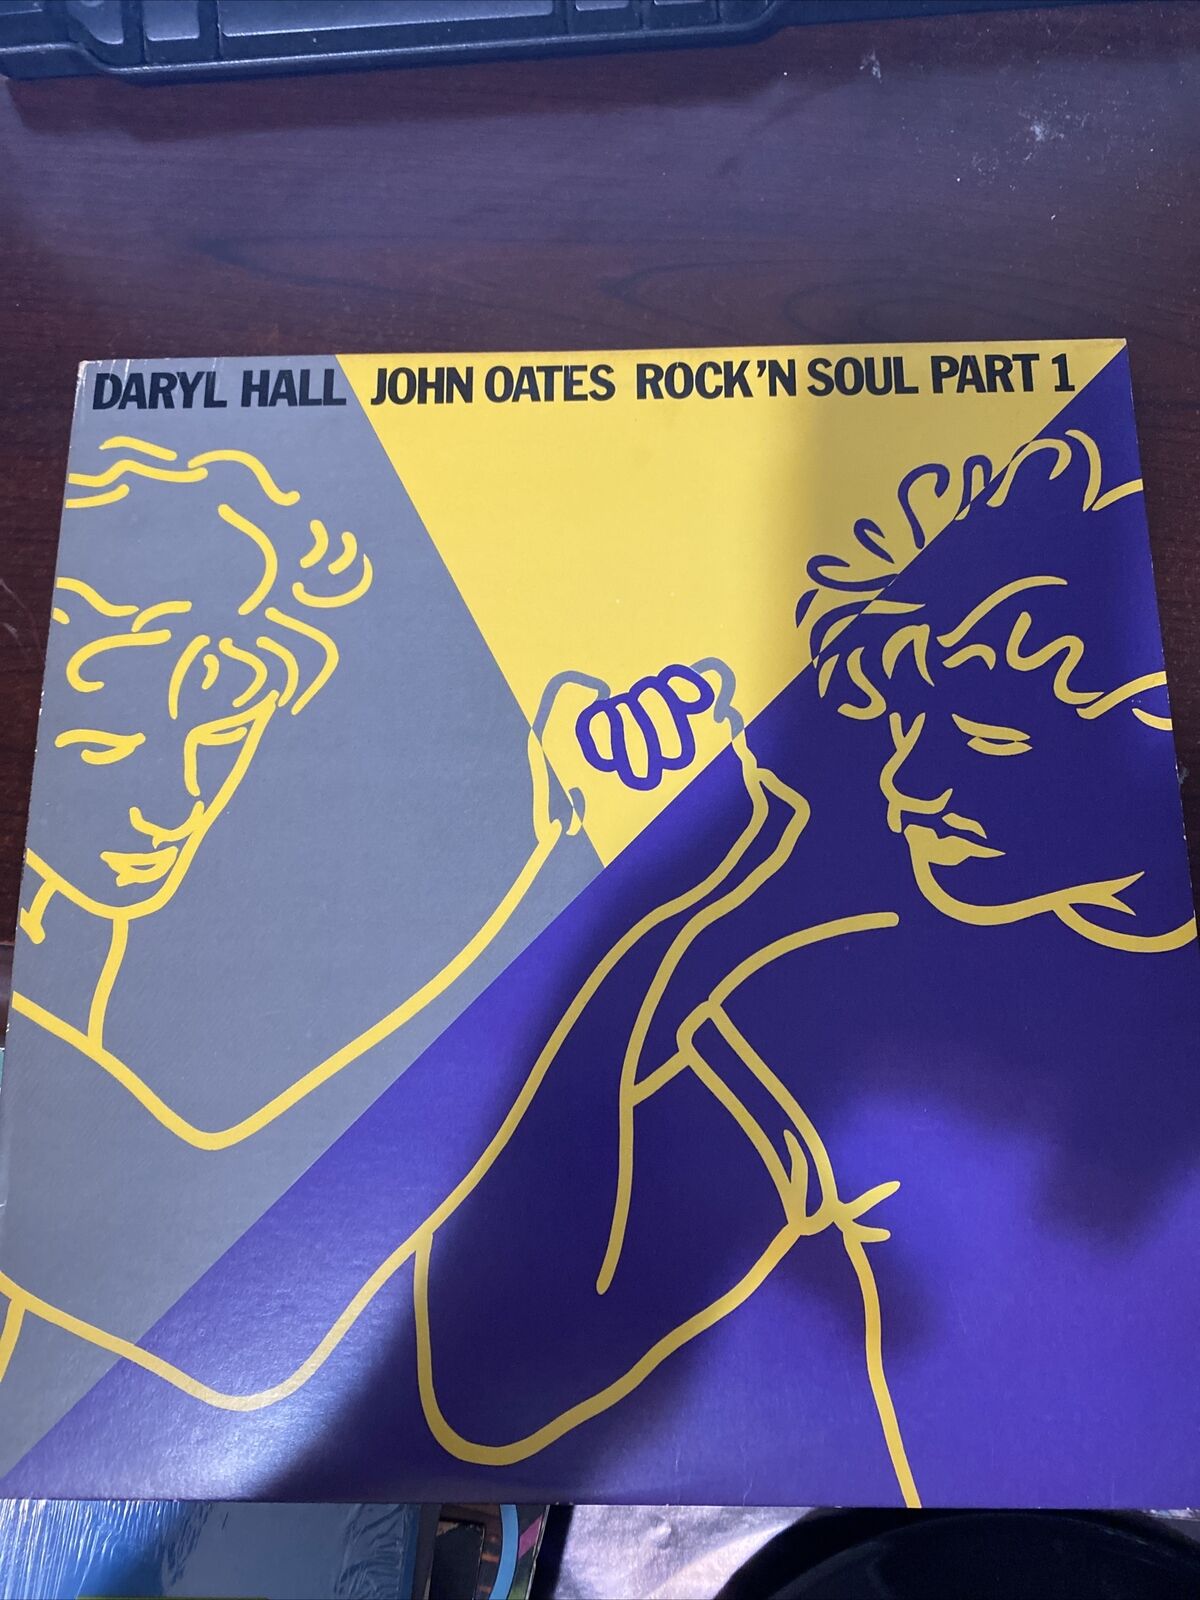 DarylHall:John Oates Rock N Soul Part1 - Vinyl lp-,VG+ Cond.CPL1-4858 ind.